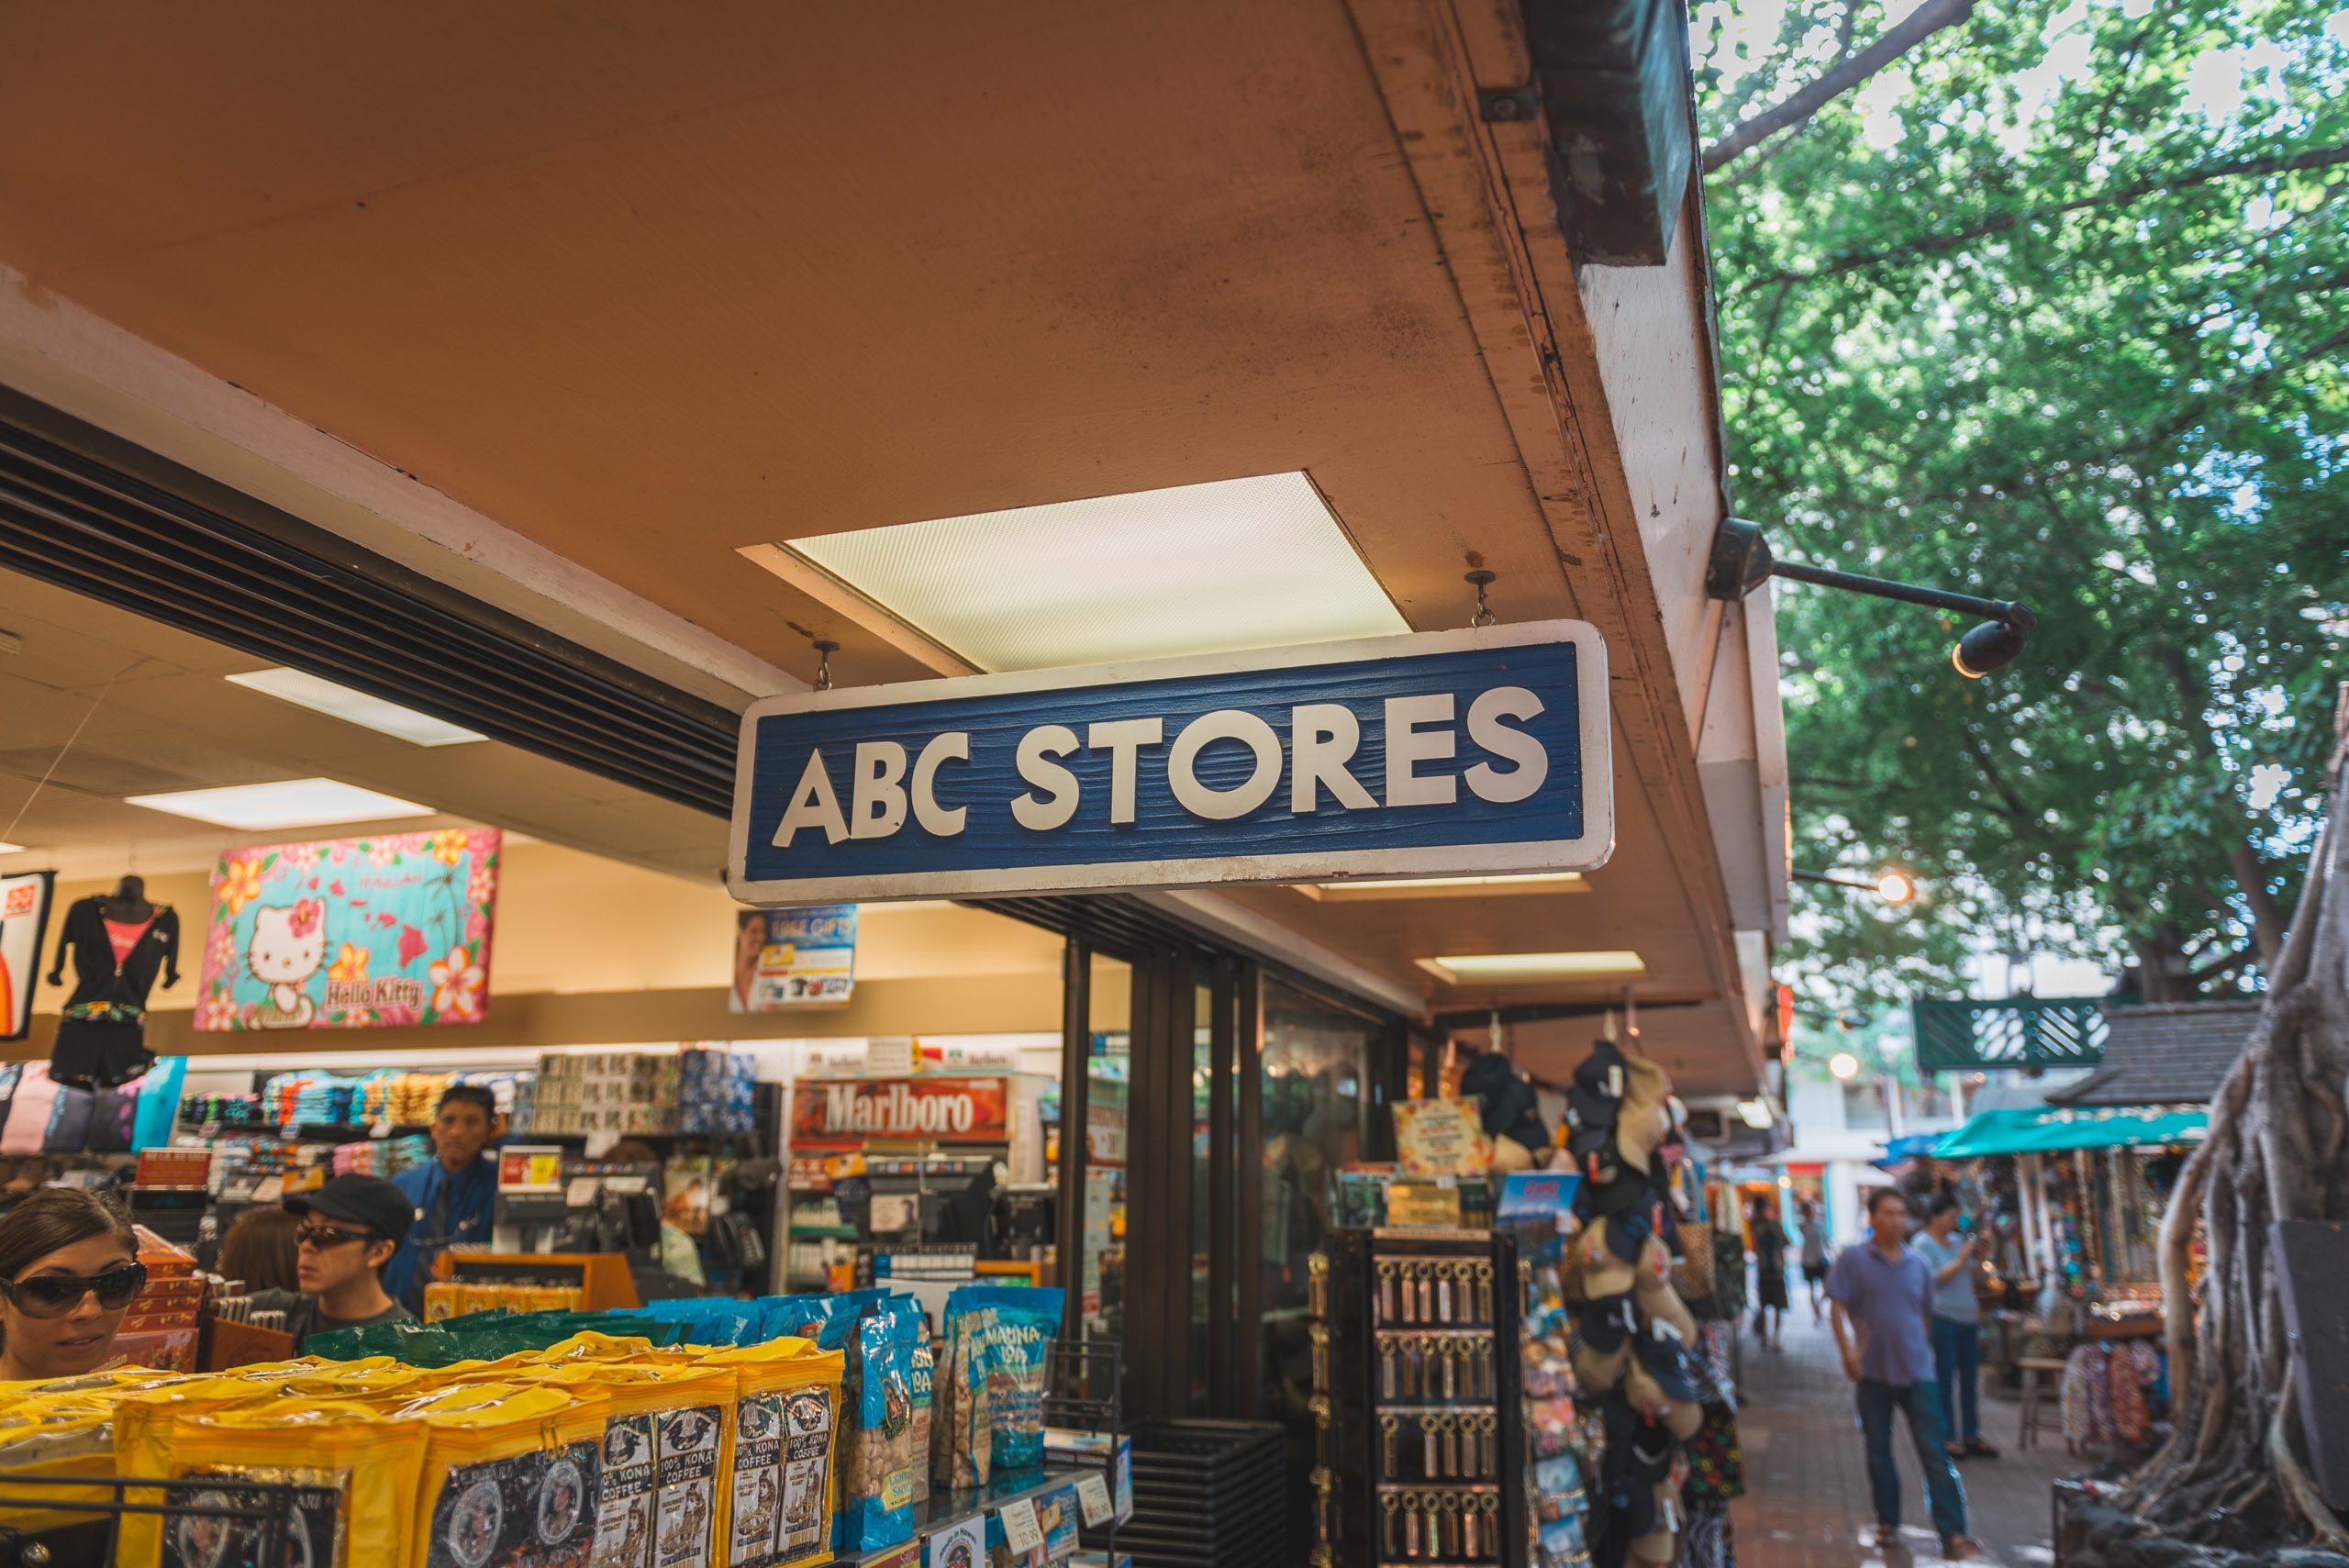 The ABC Store in Waikiki